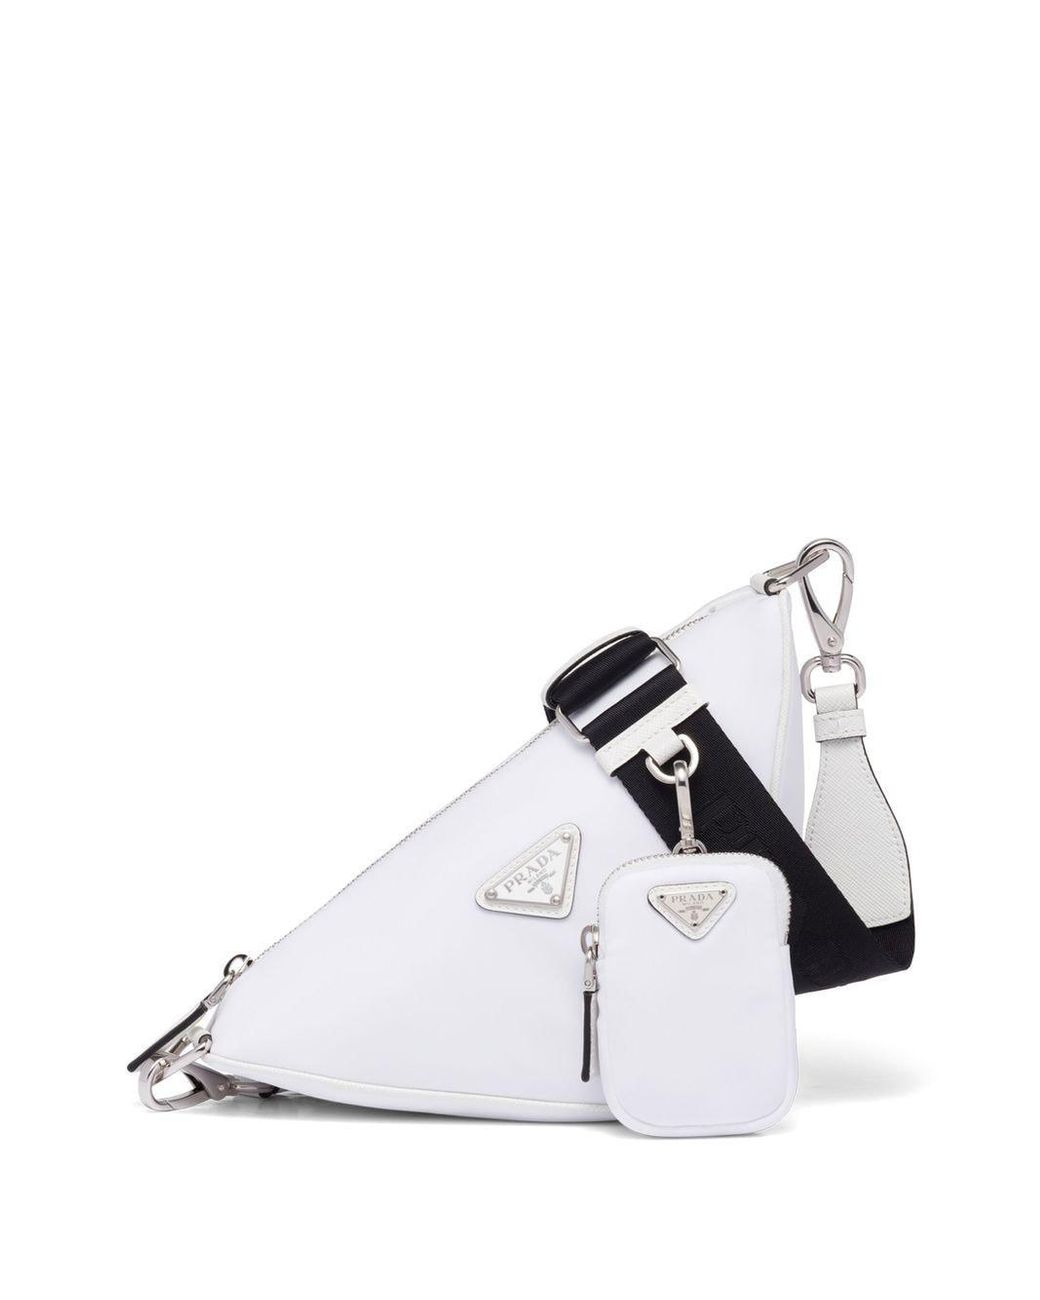 Prada Triangle Re-nylon Shoulder Bag in White